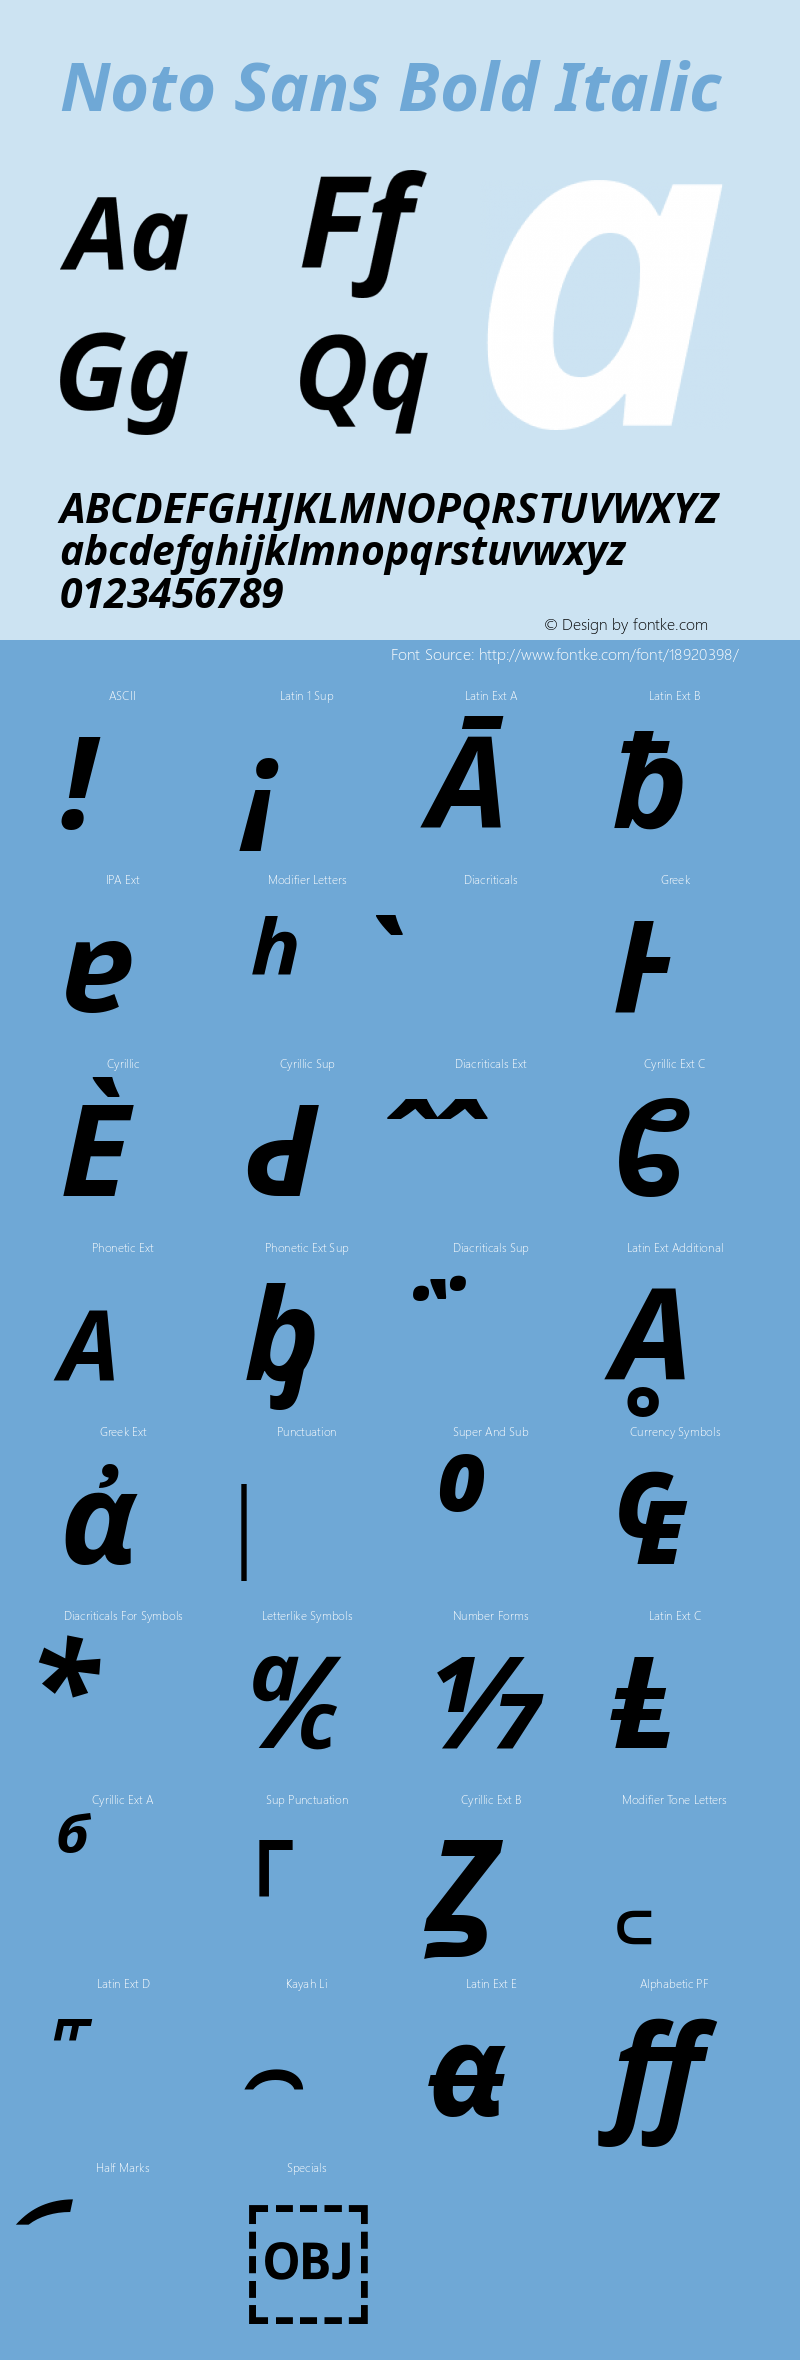 Noto Sans Bold Italic Version 1.902 Font Sample